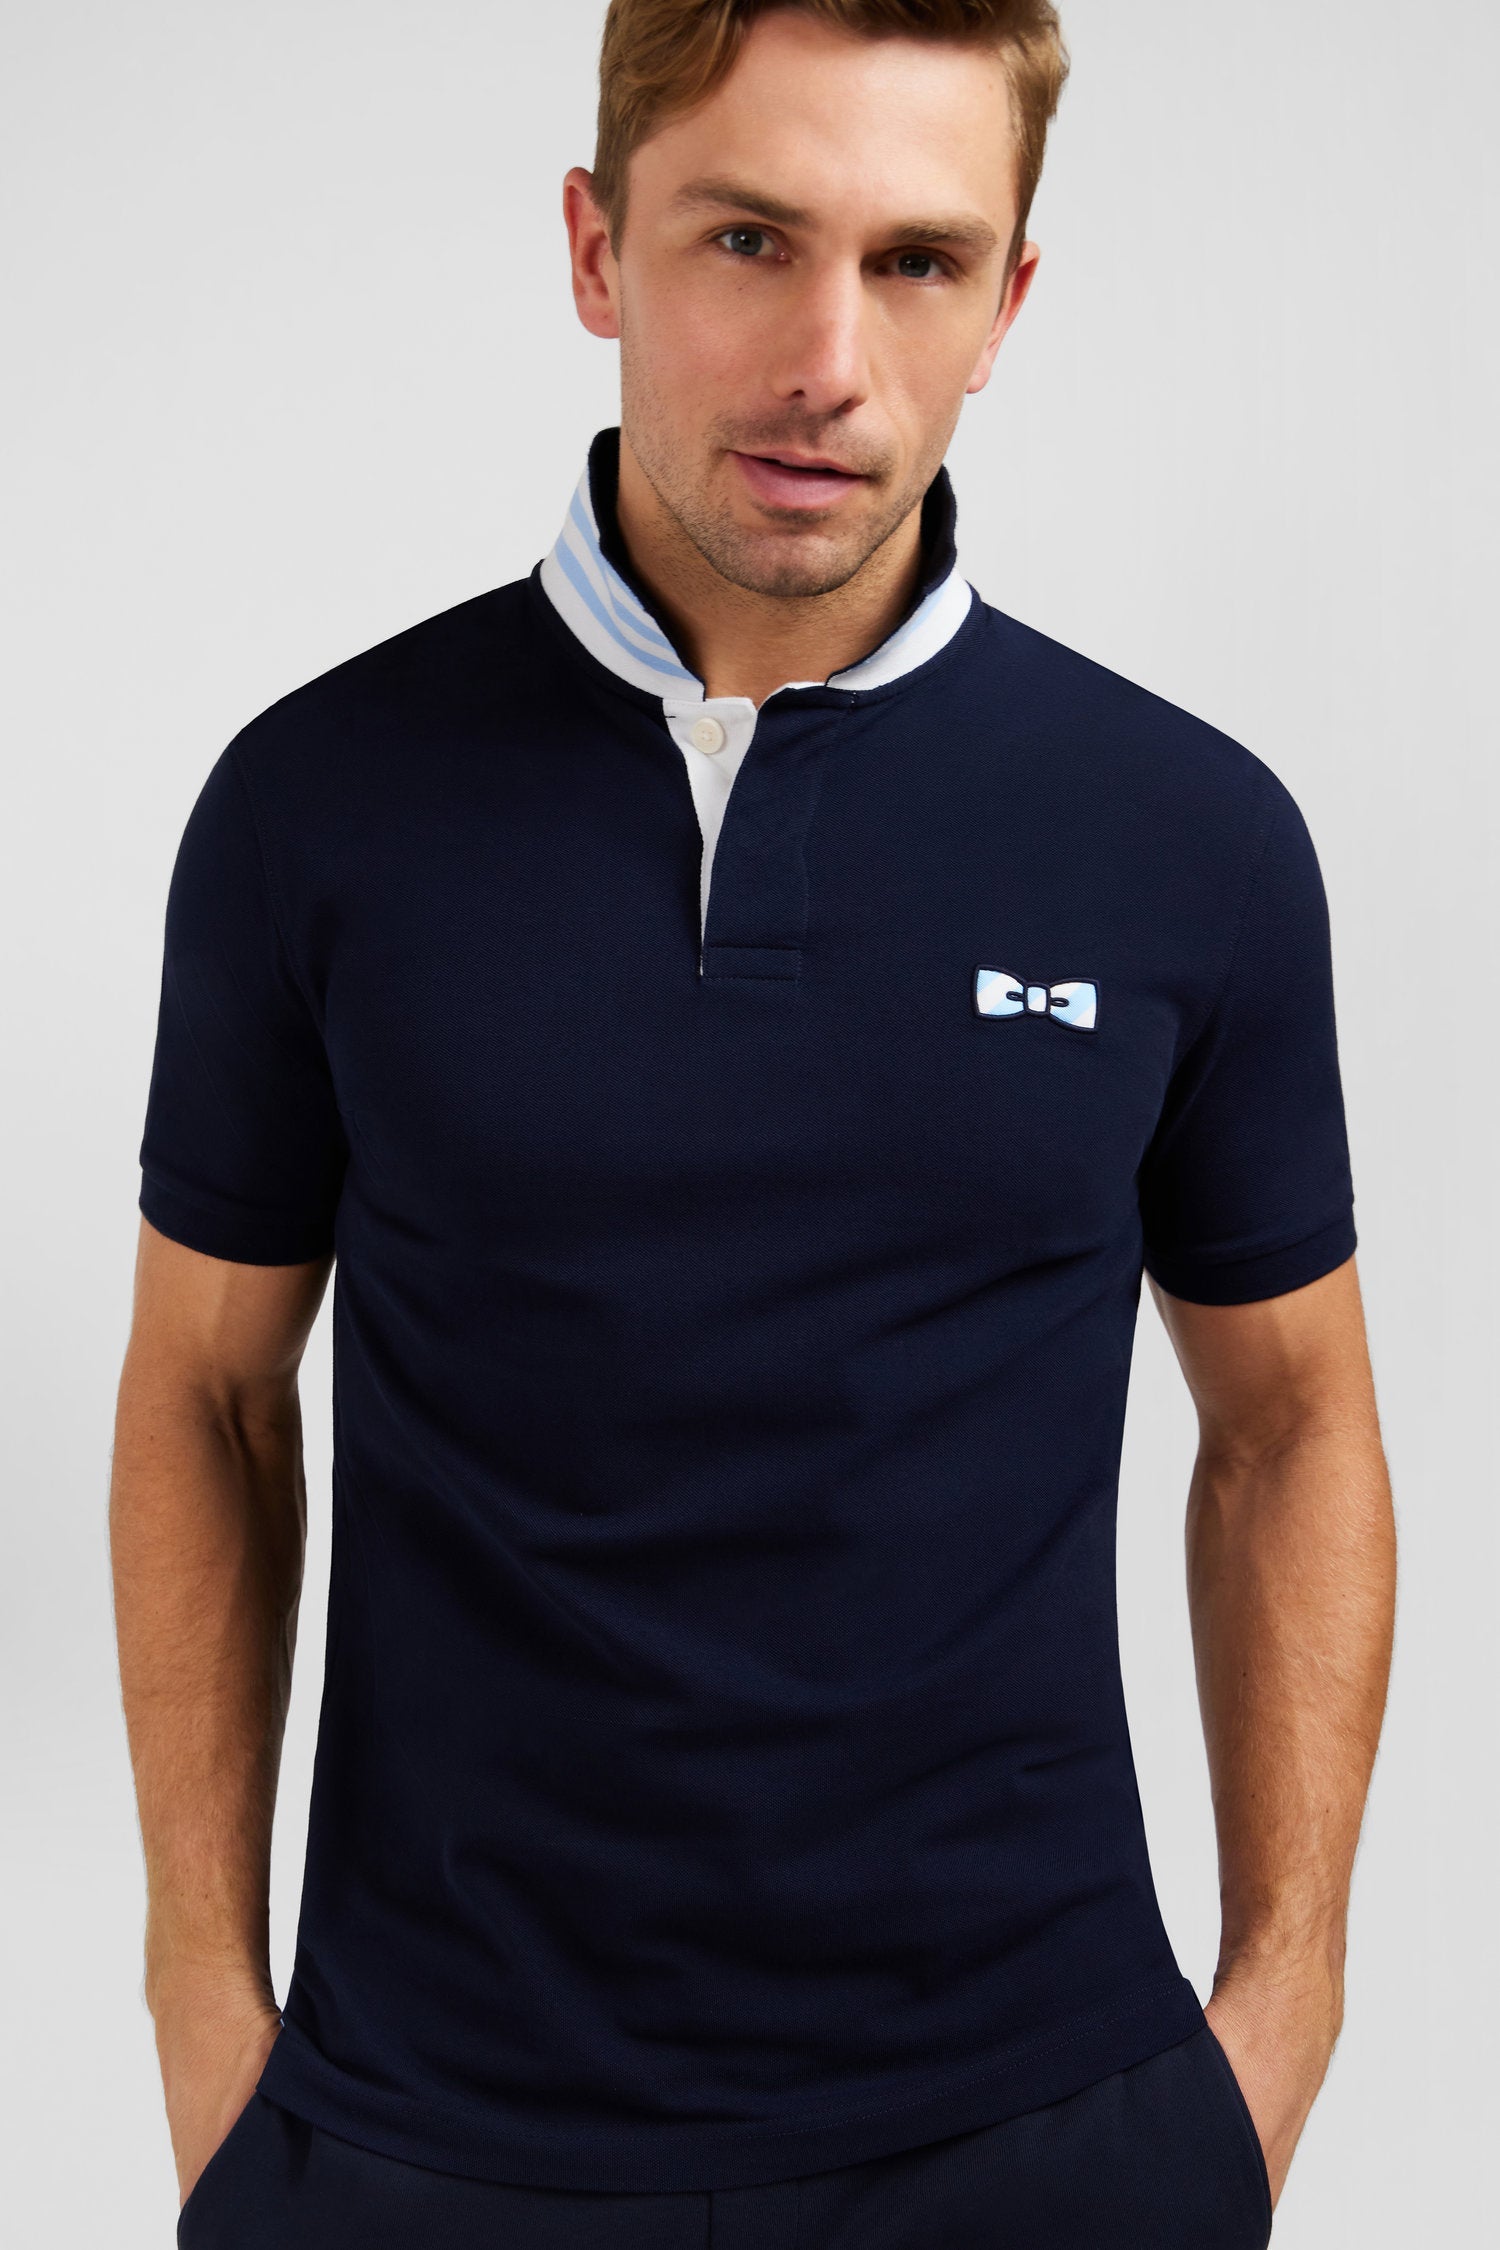 Navy blue short-sleeved polo shirt